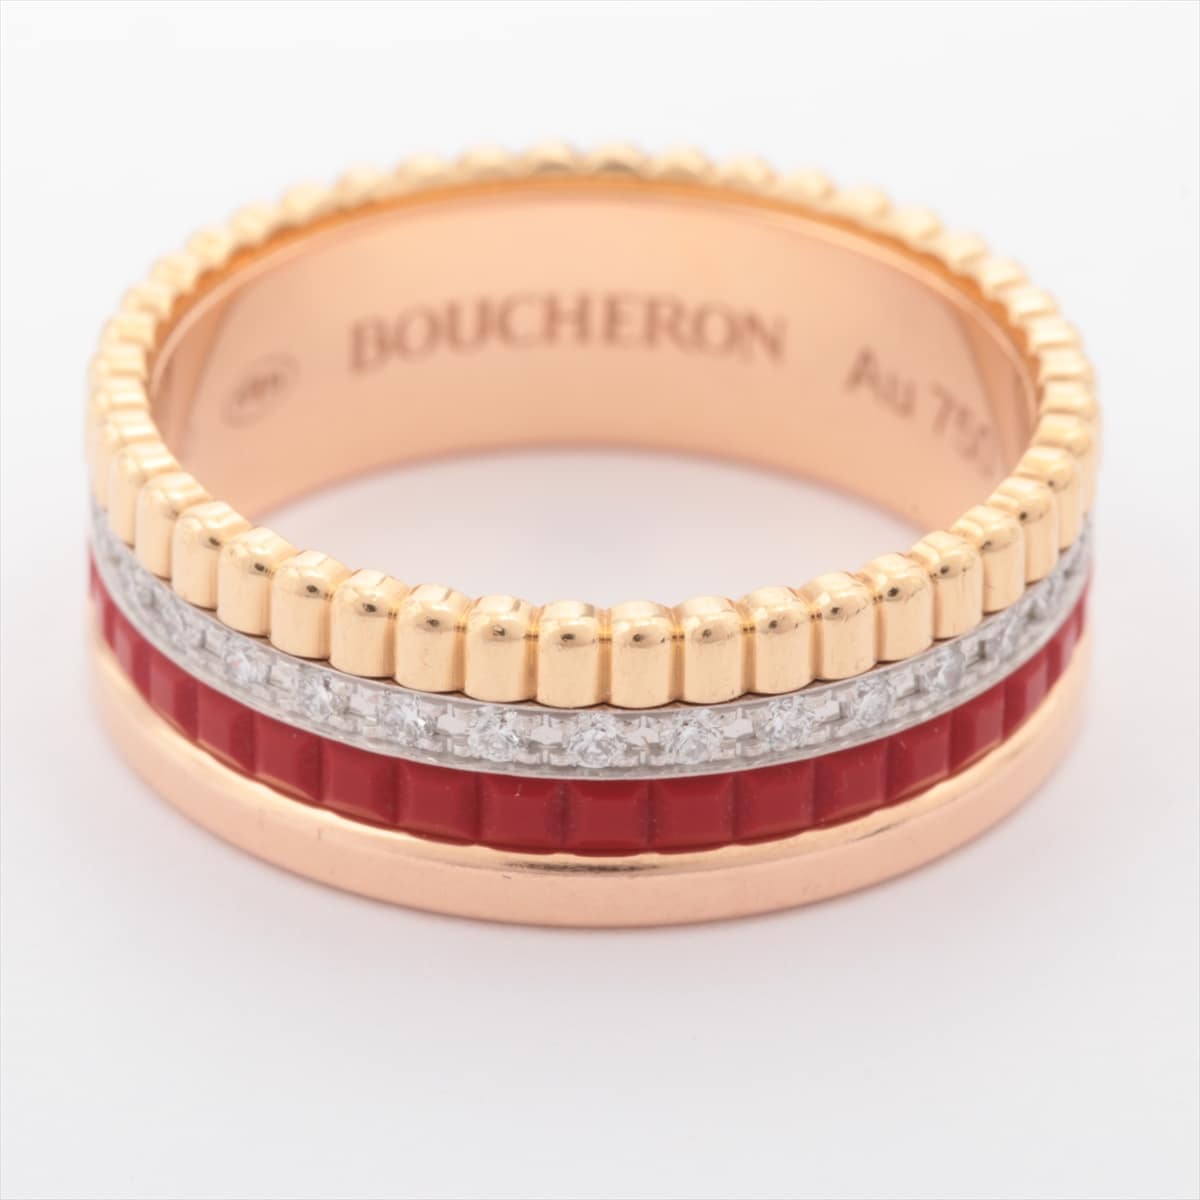 Boucheron BOUCHERON Quatre Red Diamond rings small 750YG×PG×WG #52